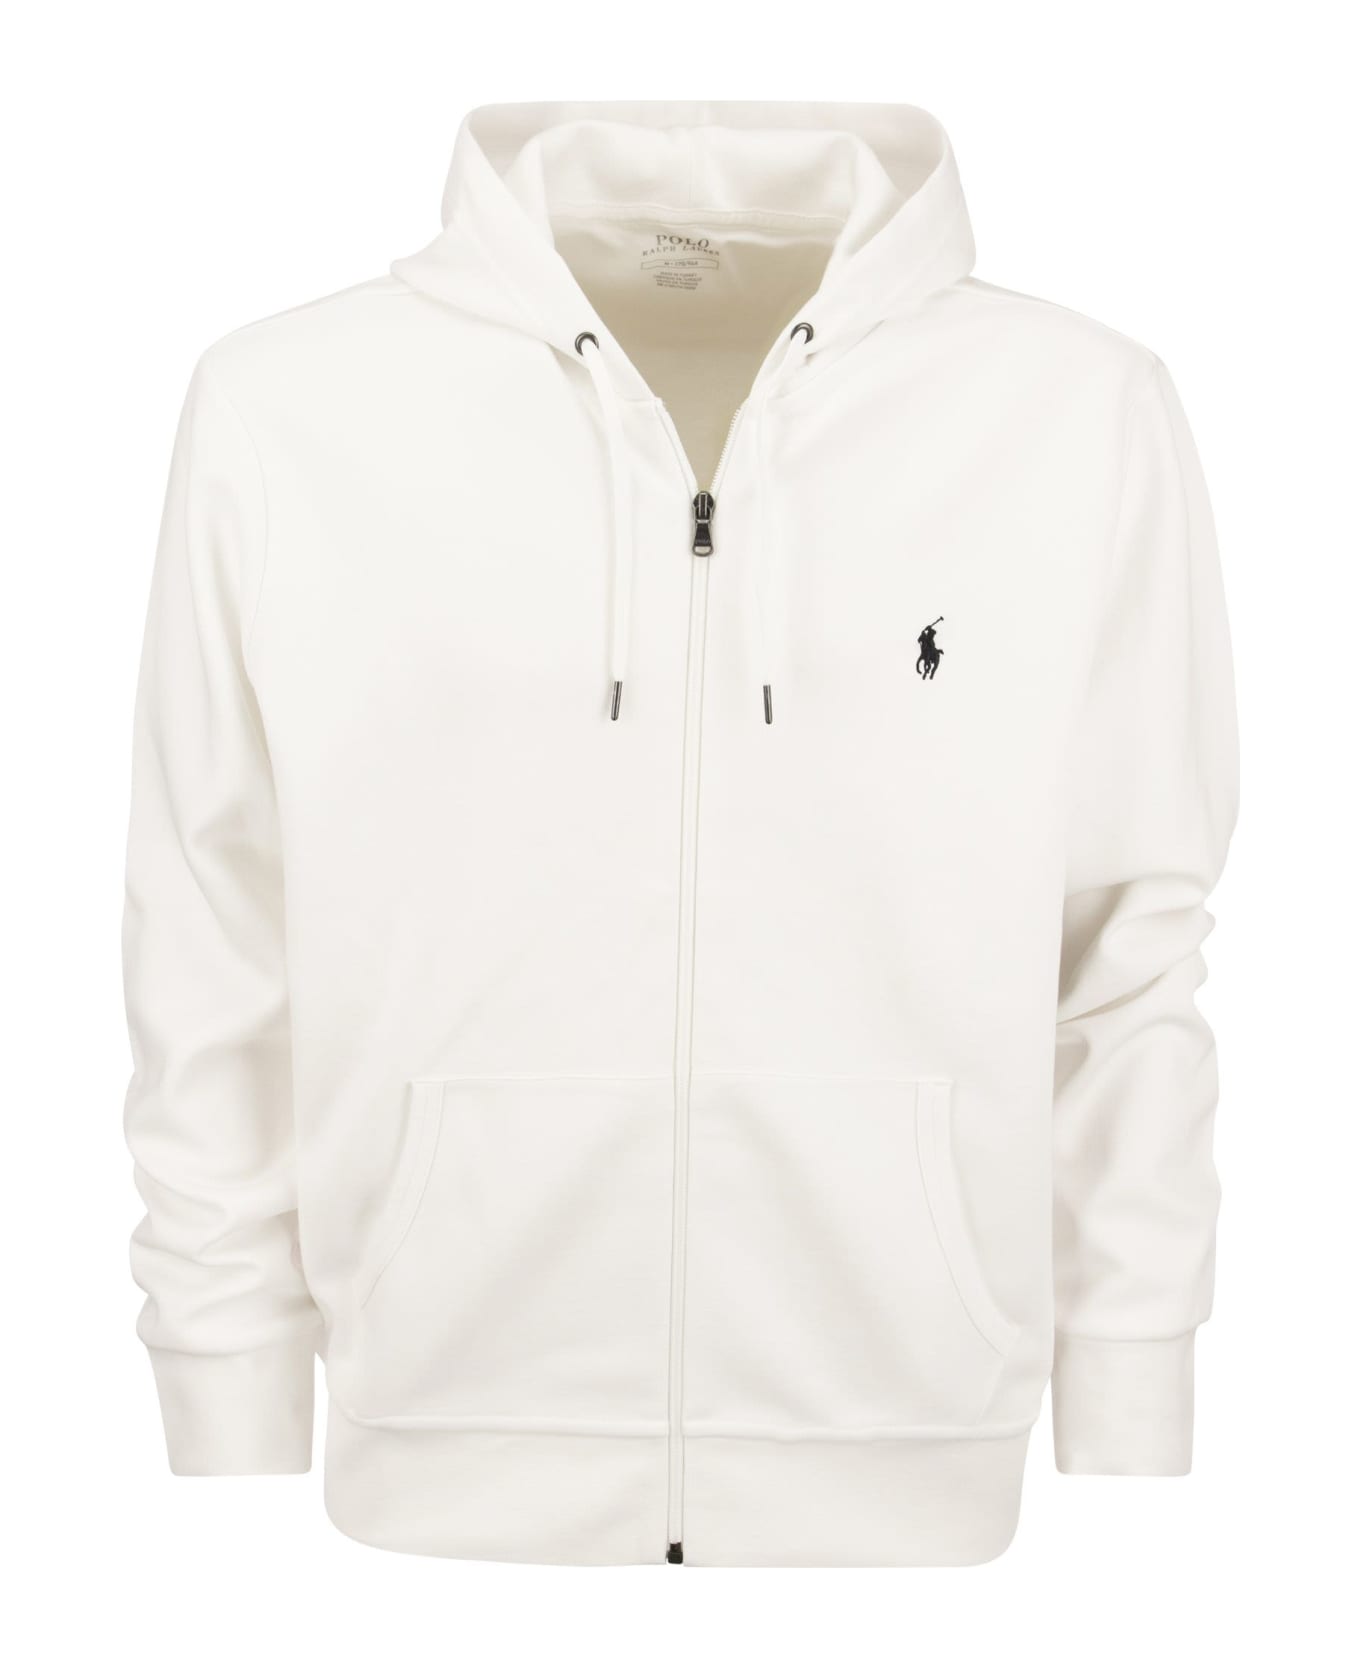 Polo Ralph Lauren Hooded Sweatshirt - White